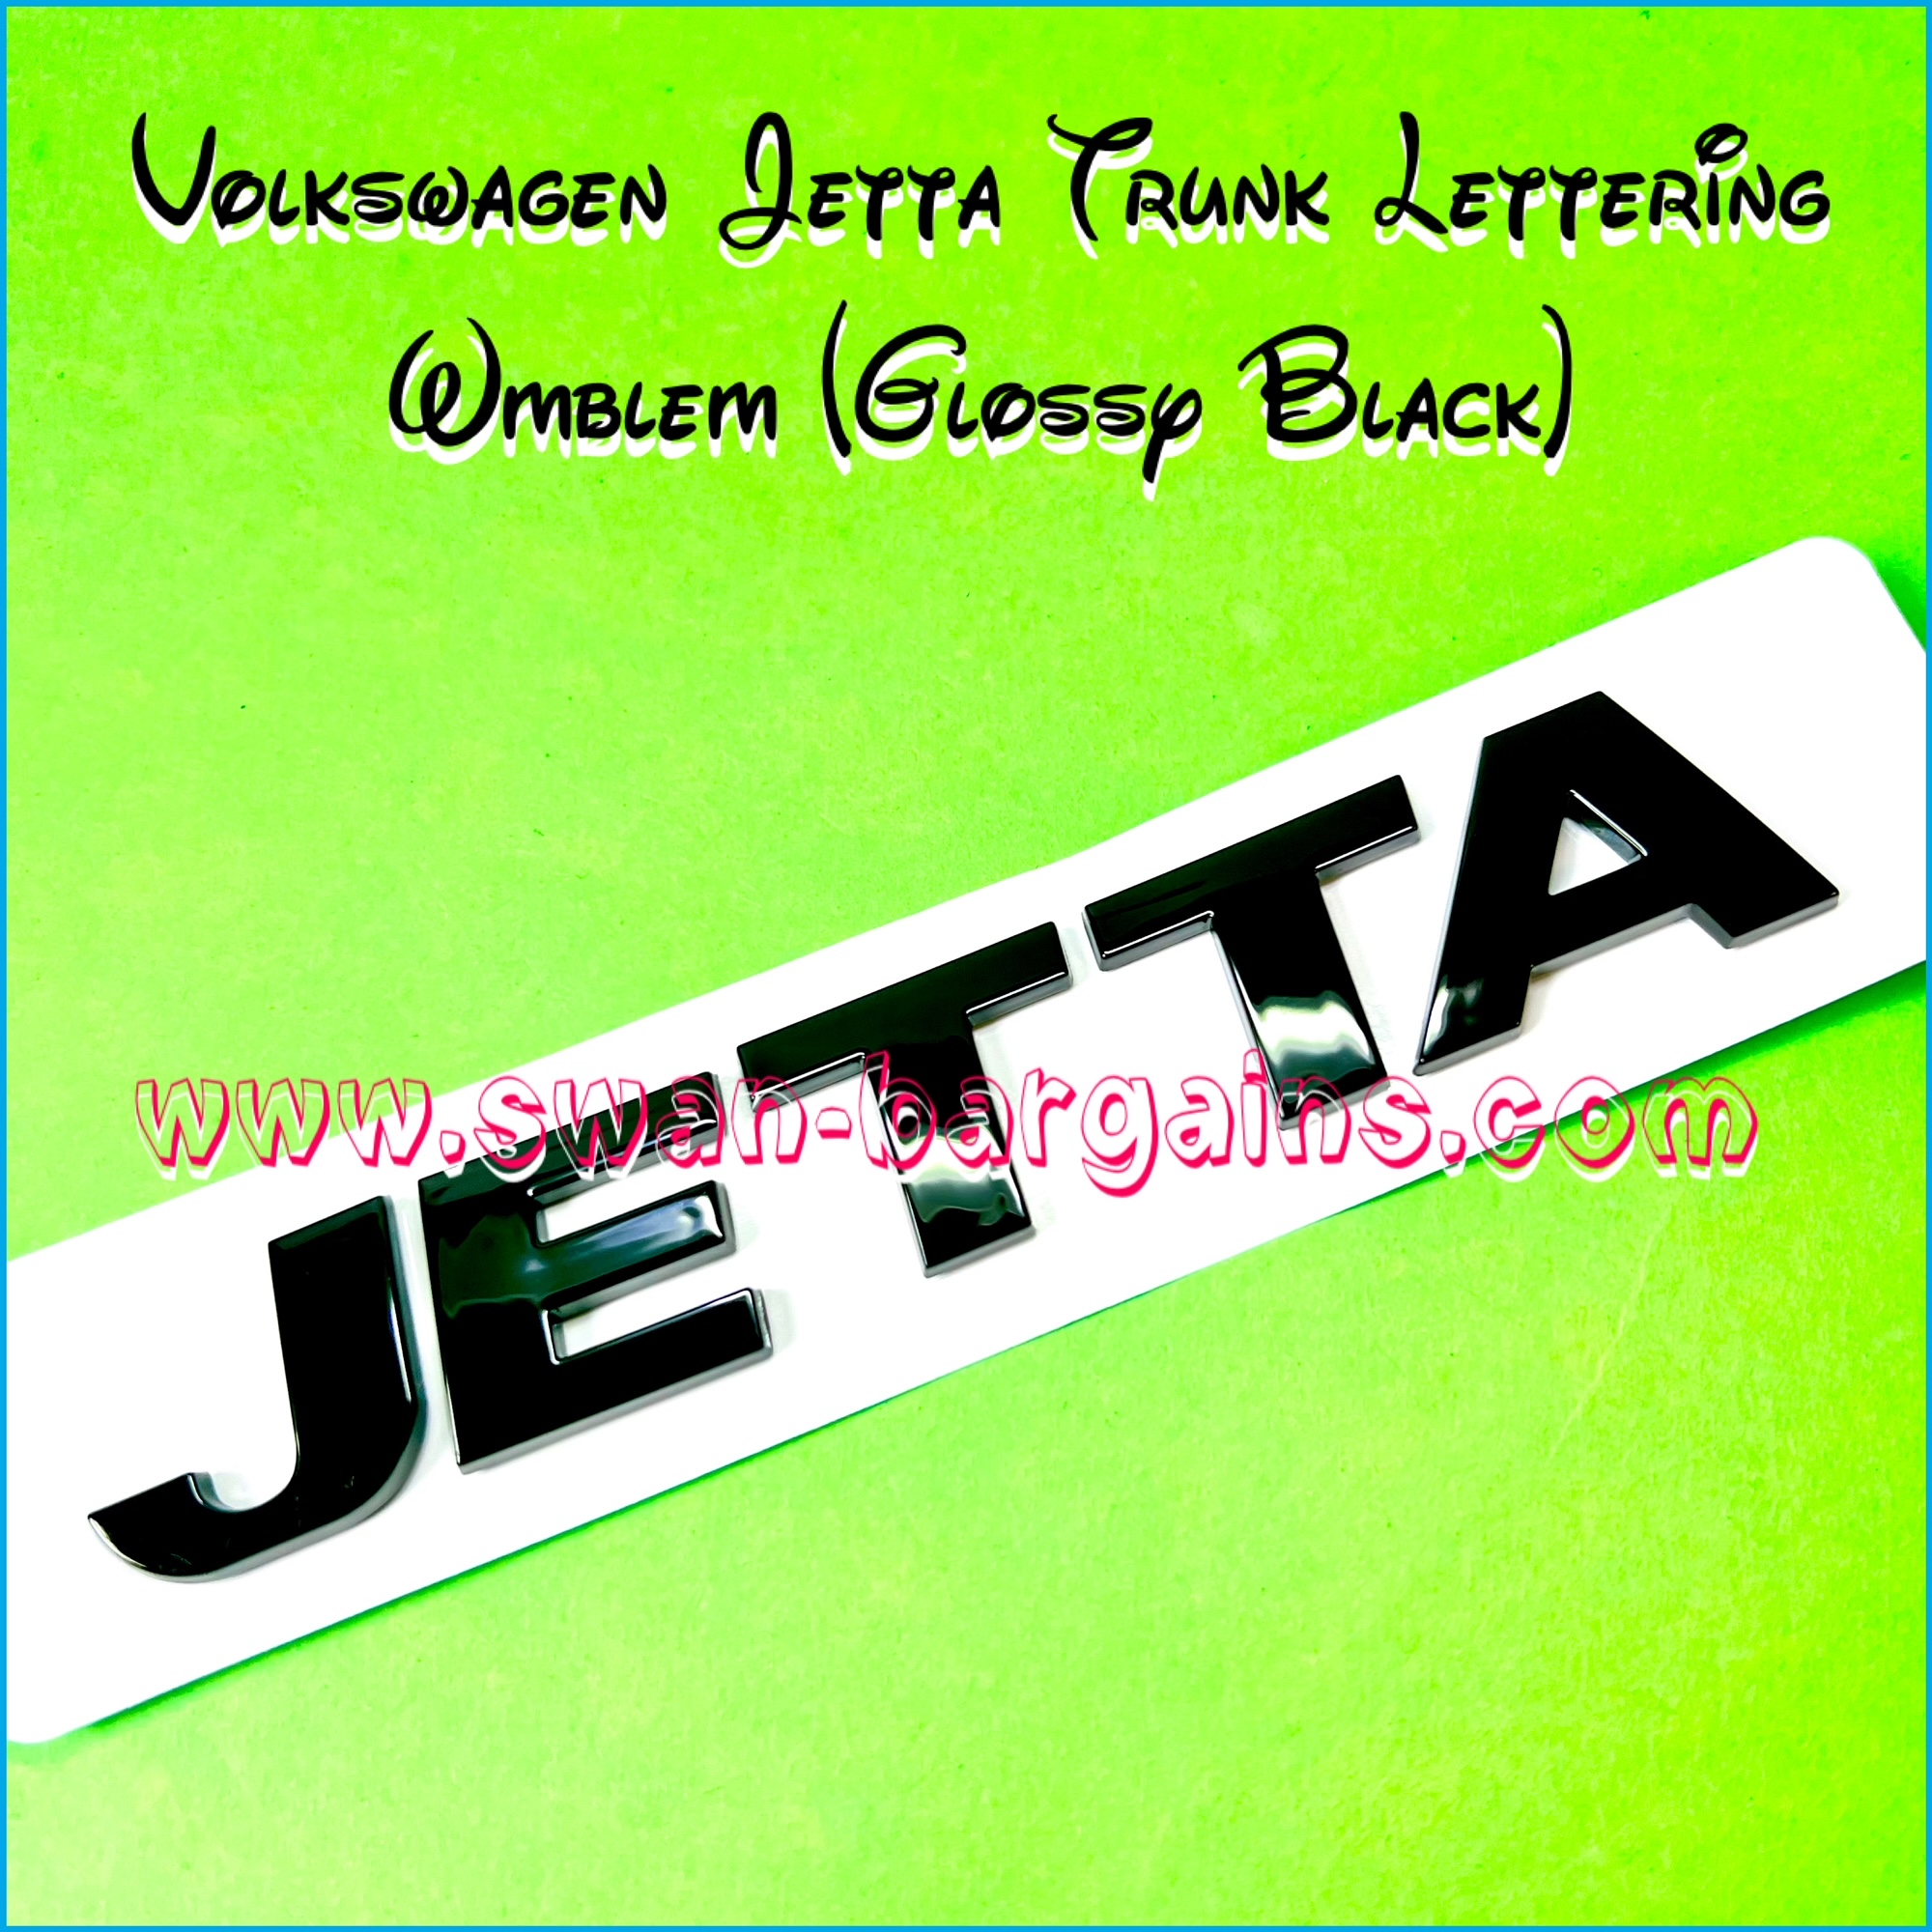 VW Jetta Trunk Lettering Emblem Singapore - Glossy Black